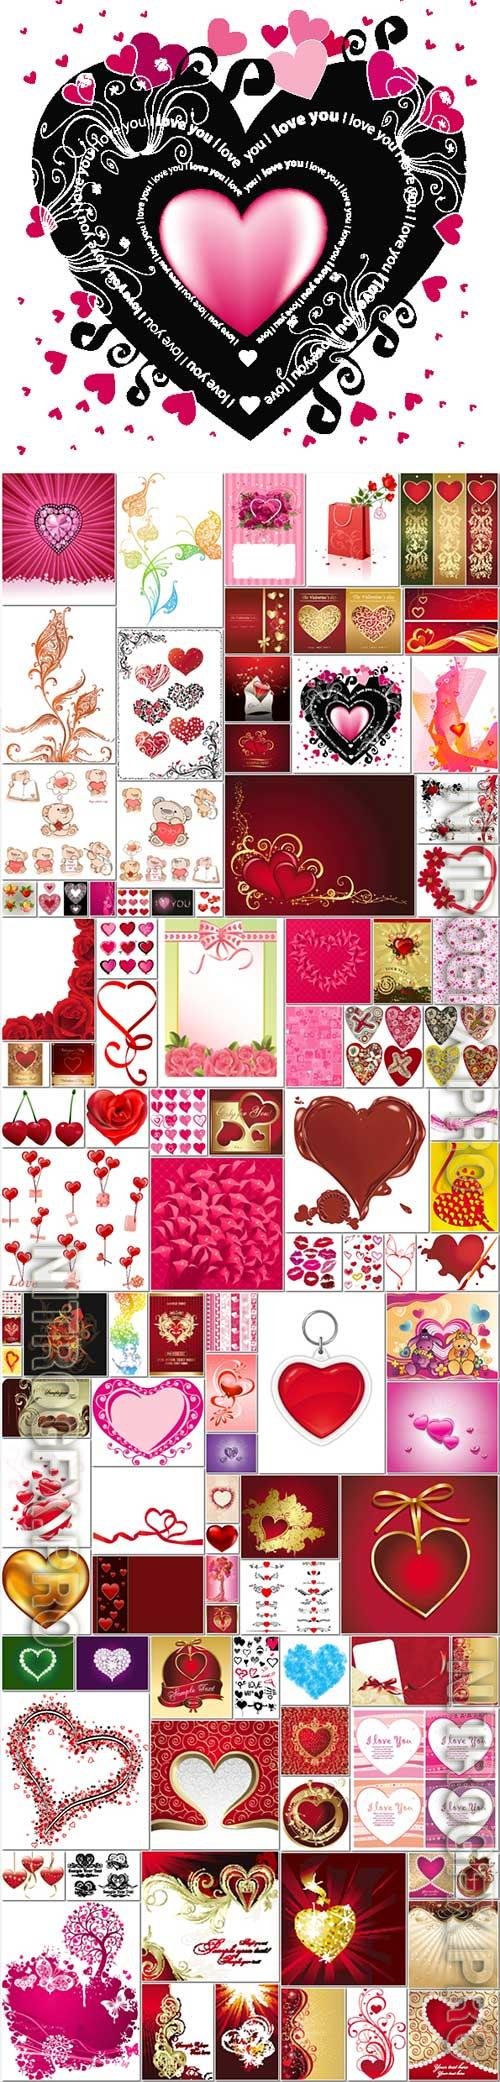 100 Bundle Happy Valentines Day, love, romance, hearts in vector vol 11